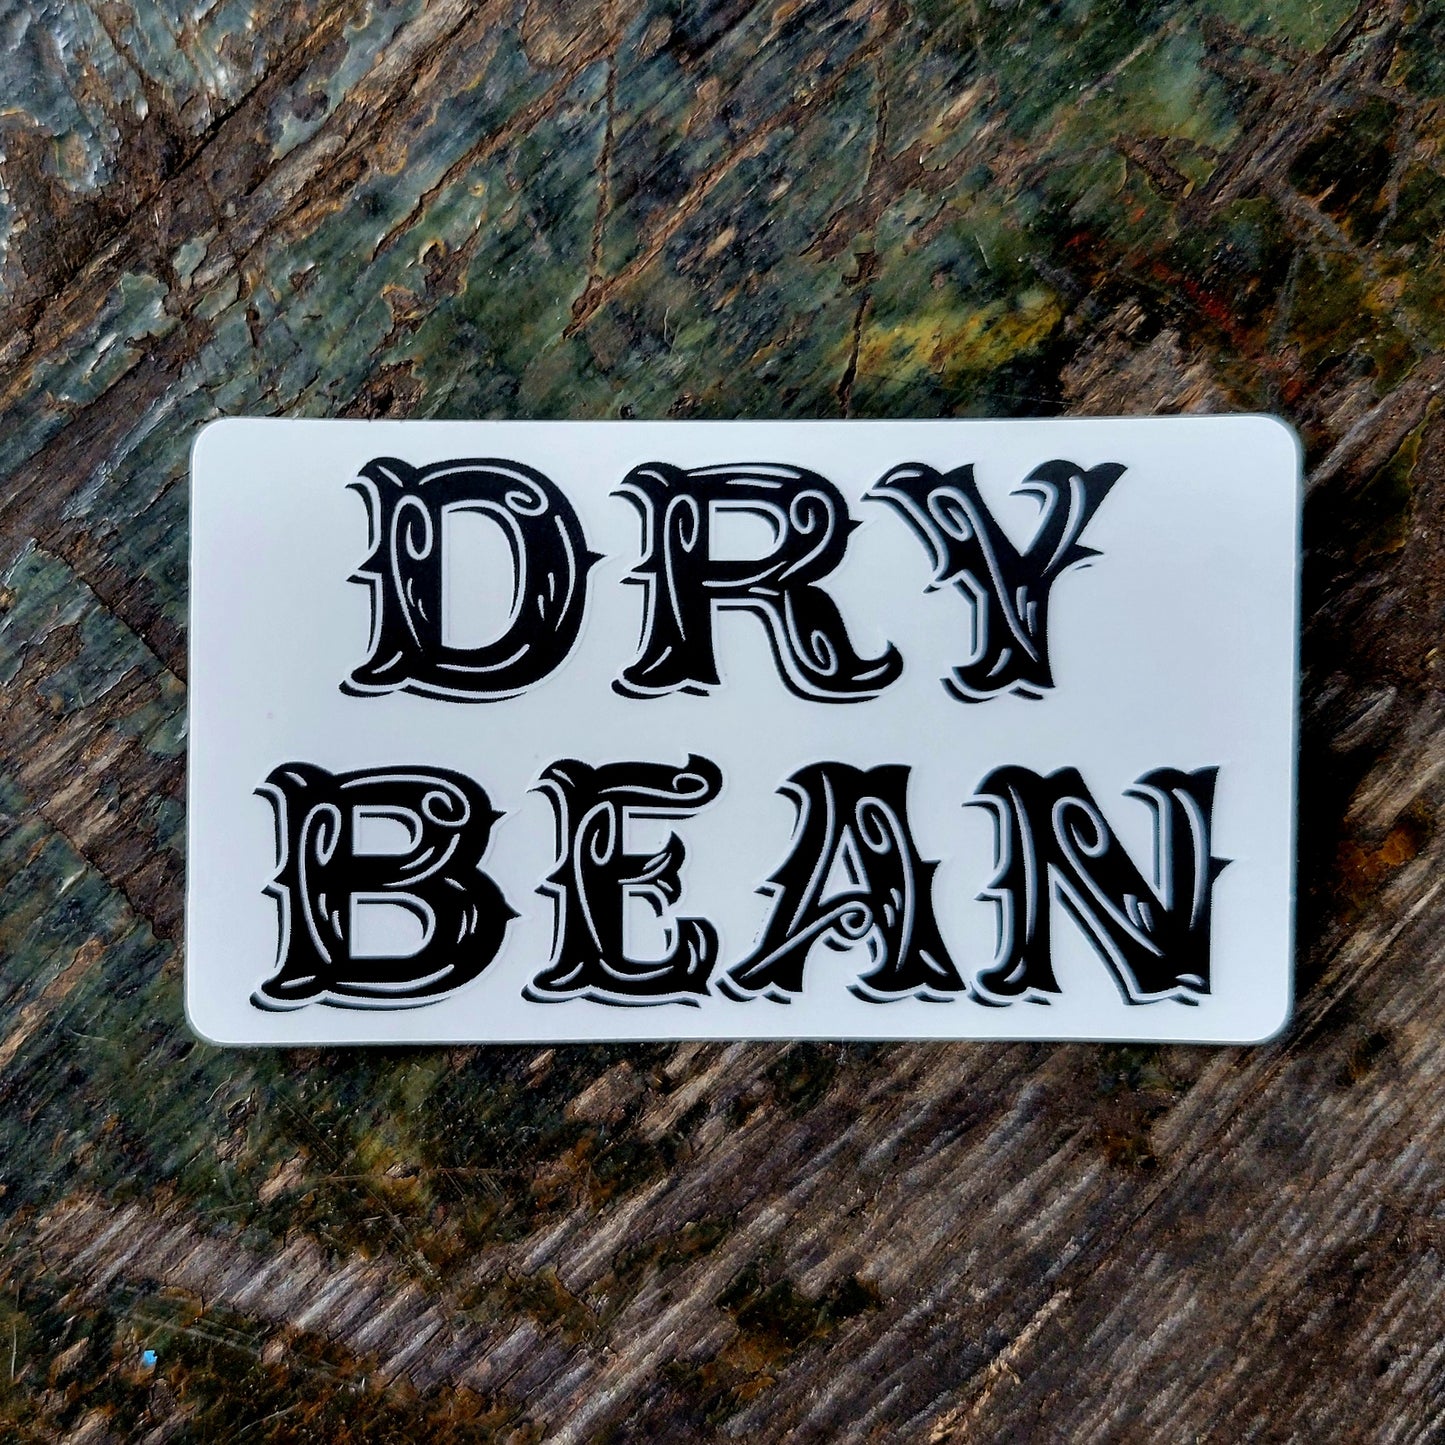 Dry Bean Sticker